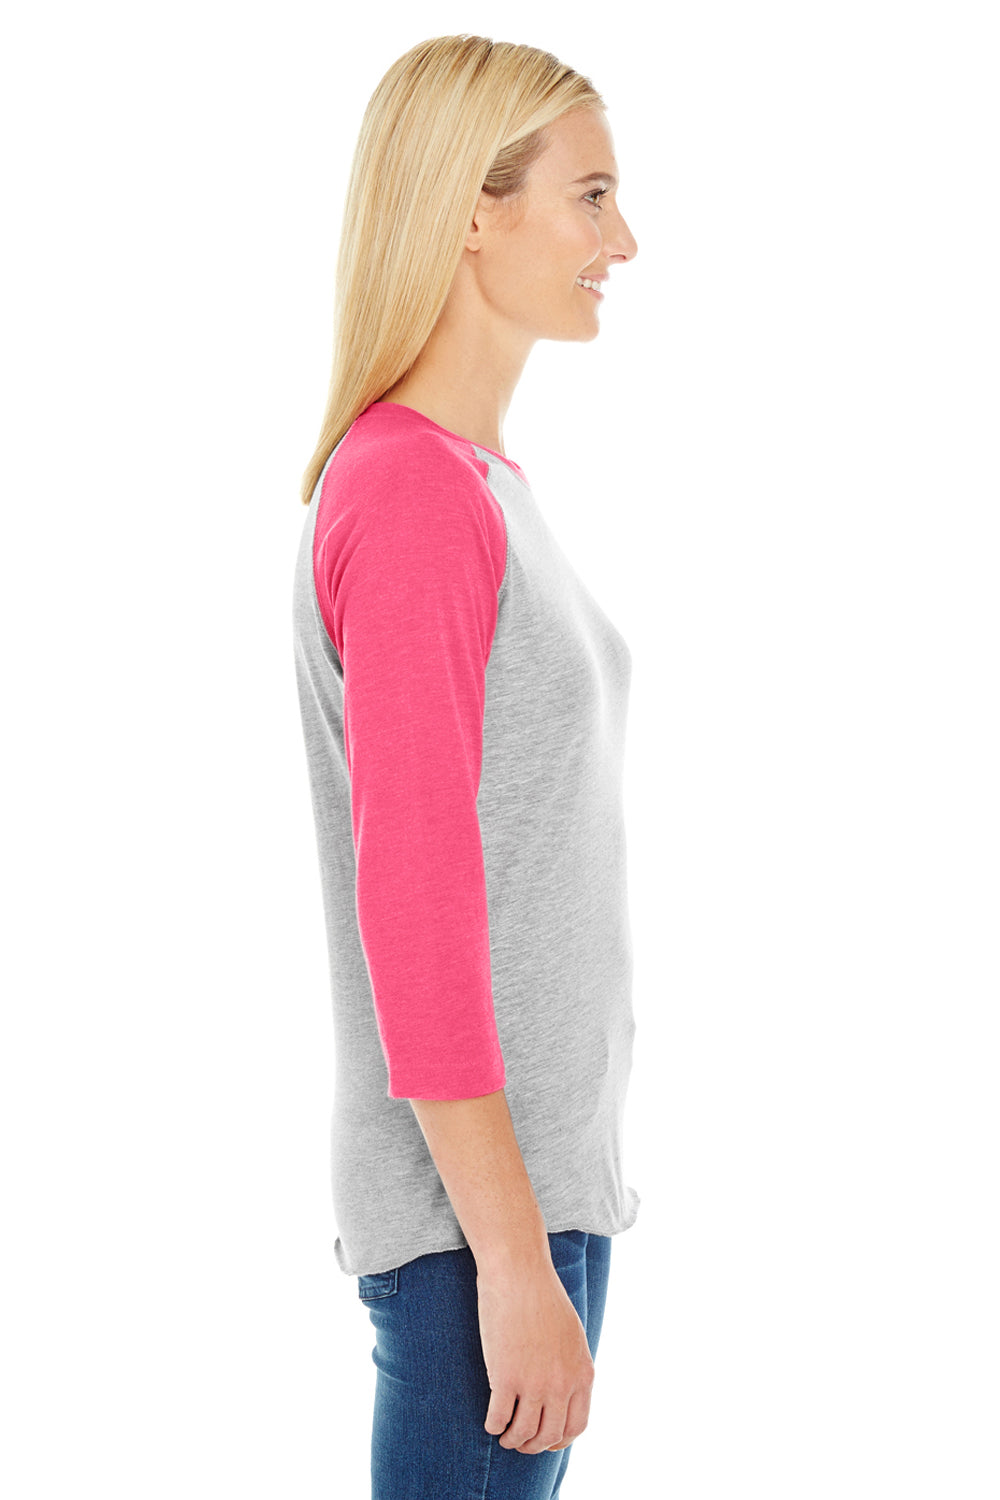 LAT LA3530 Womens Fine Jersey 3/4 Sleeve Crewneck T-Shirt Heather Grey/Pink Side